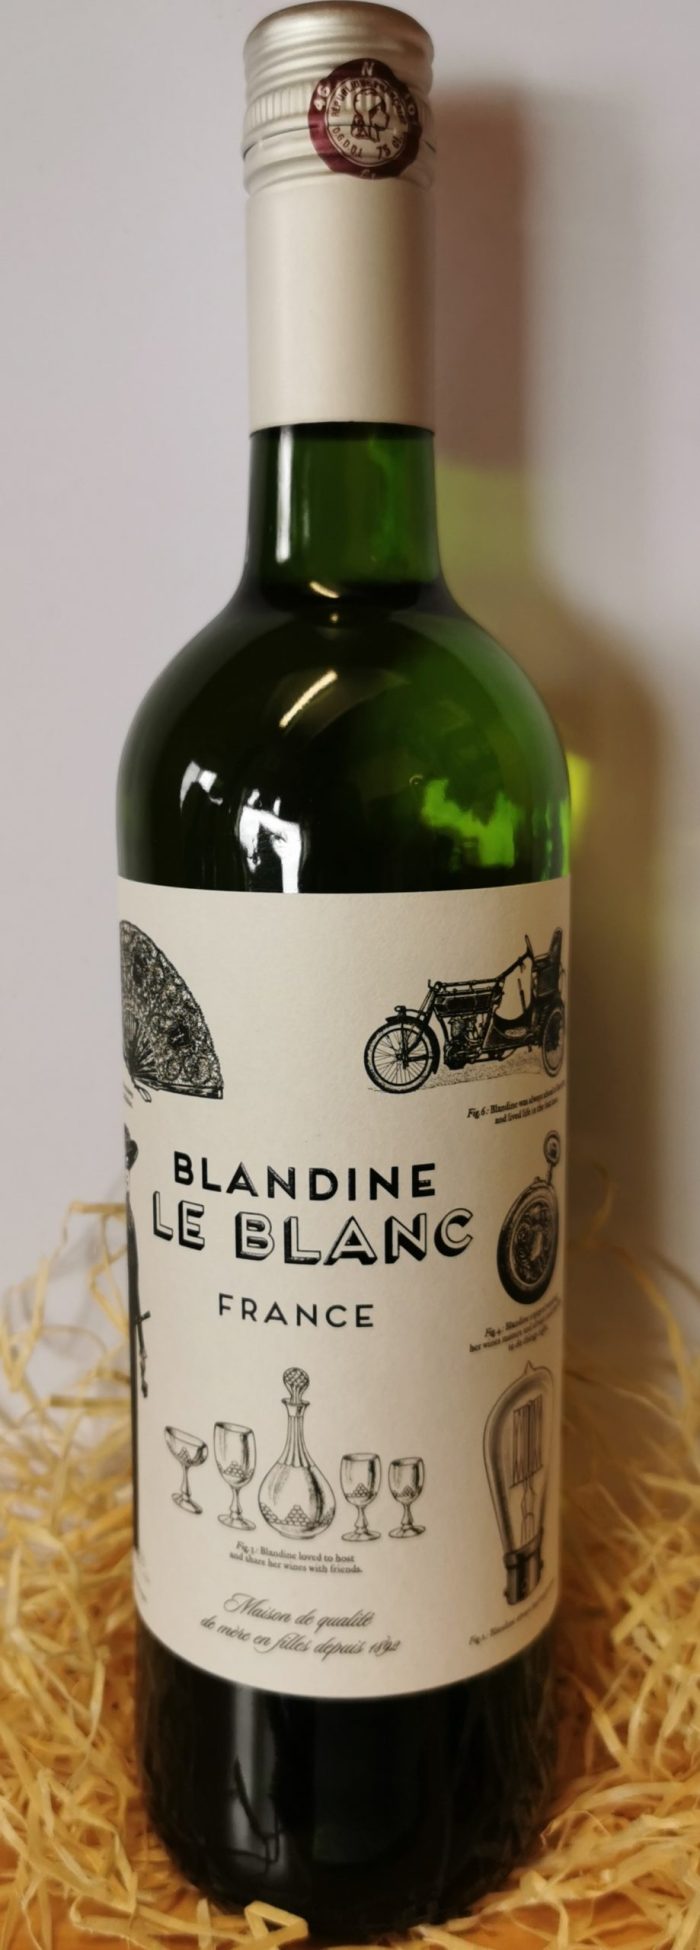 Blandine Le Blanc White wine